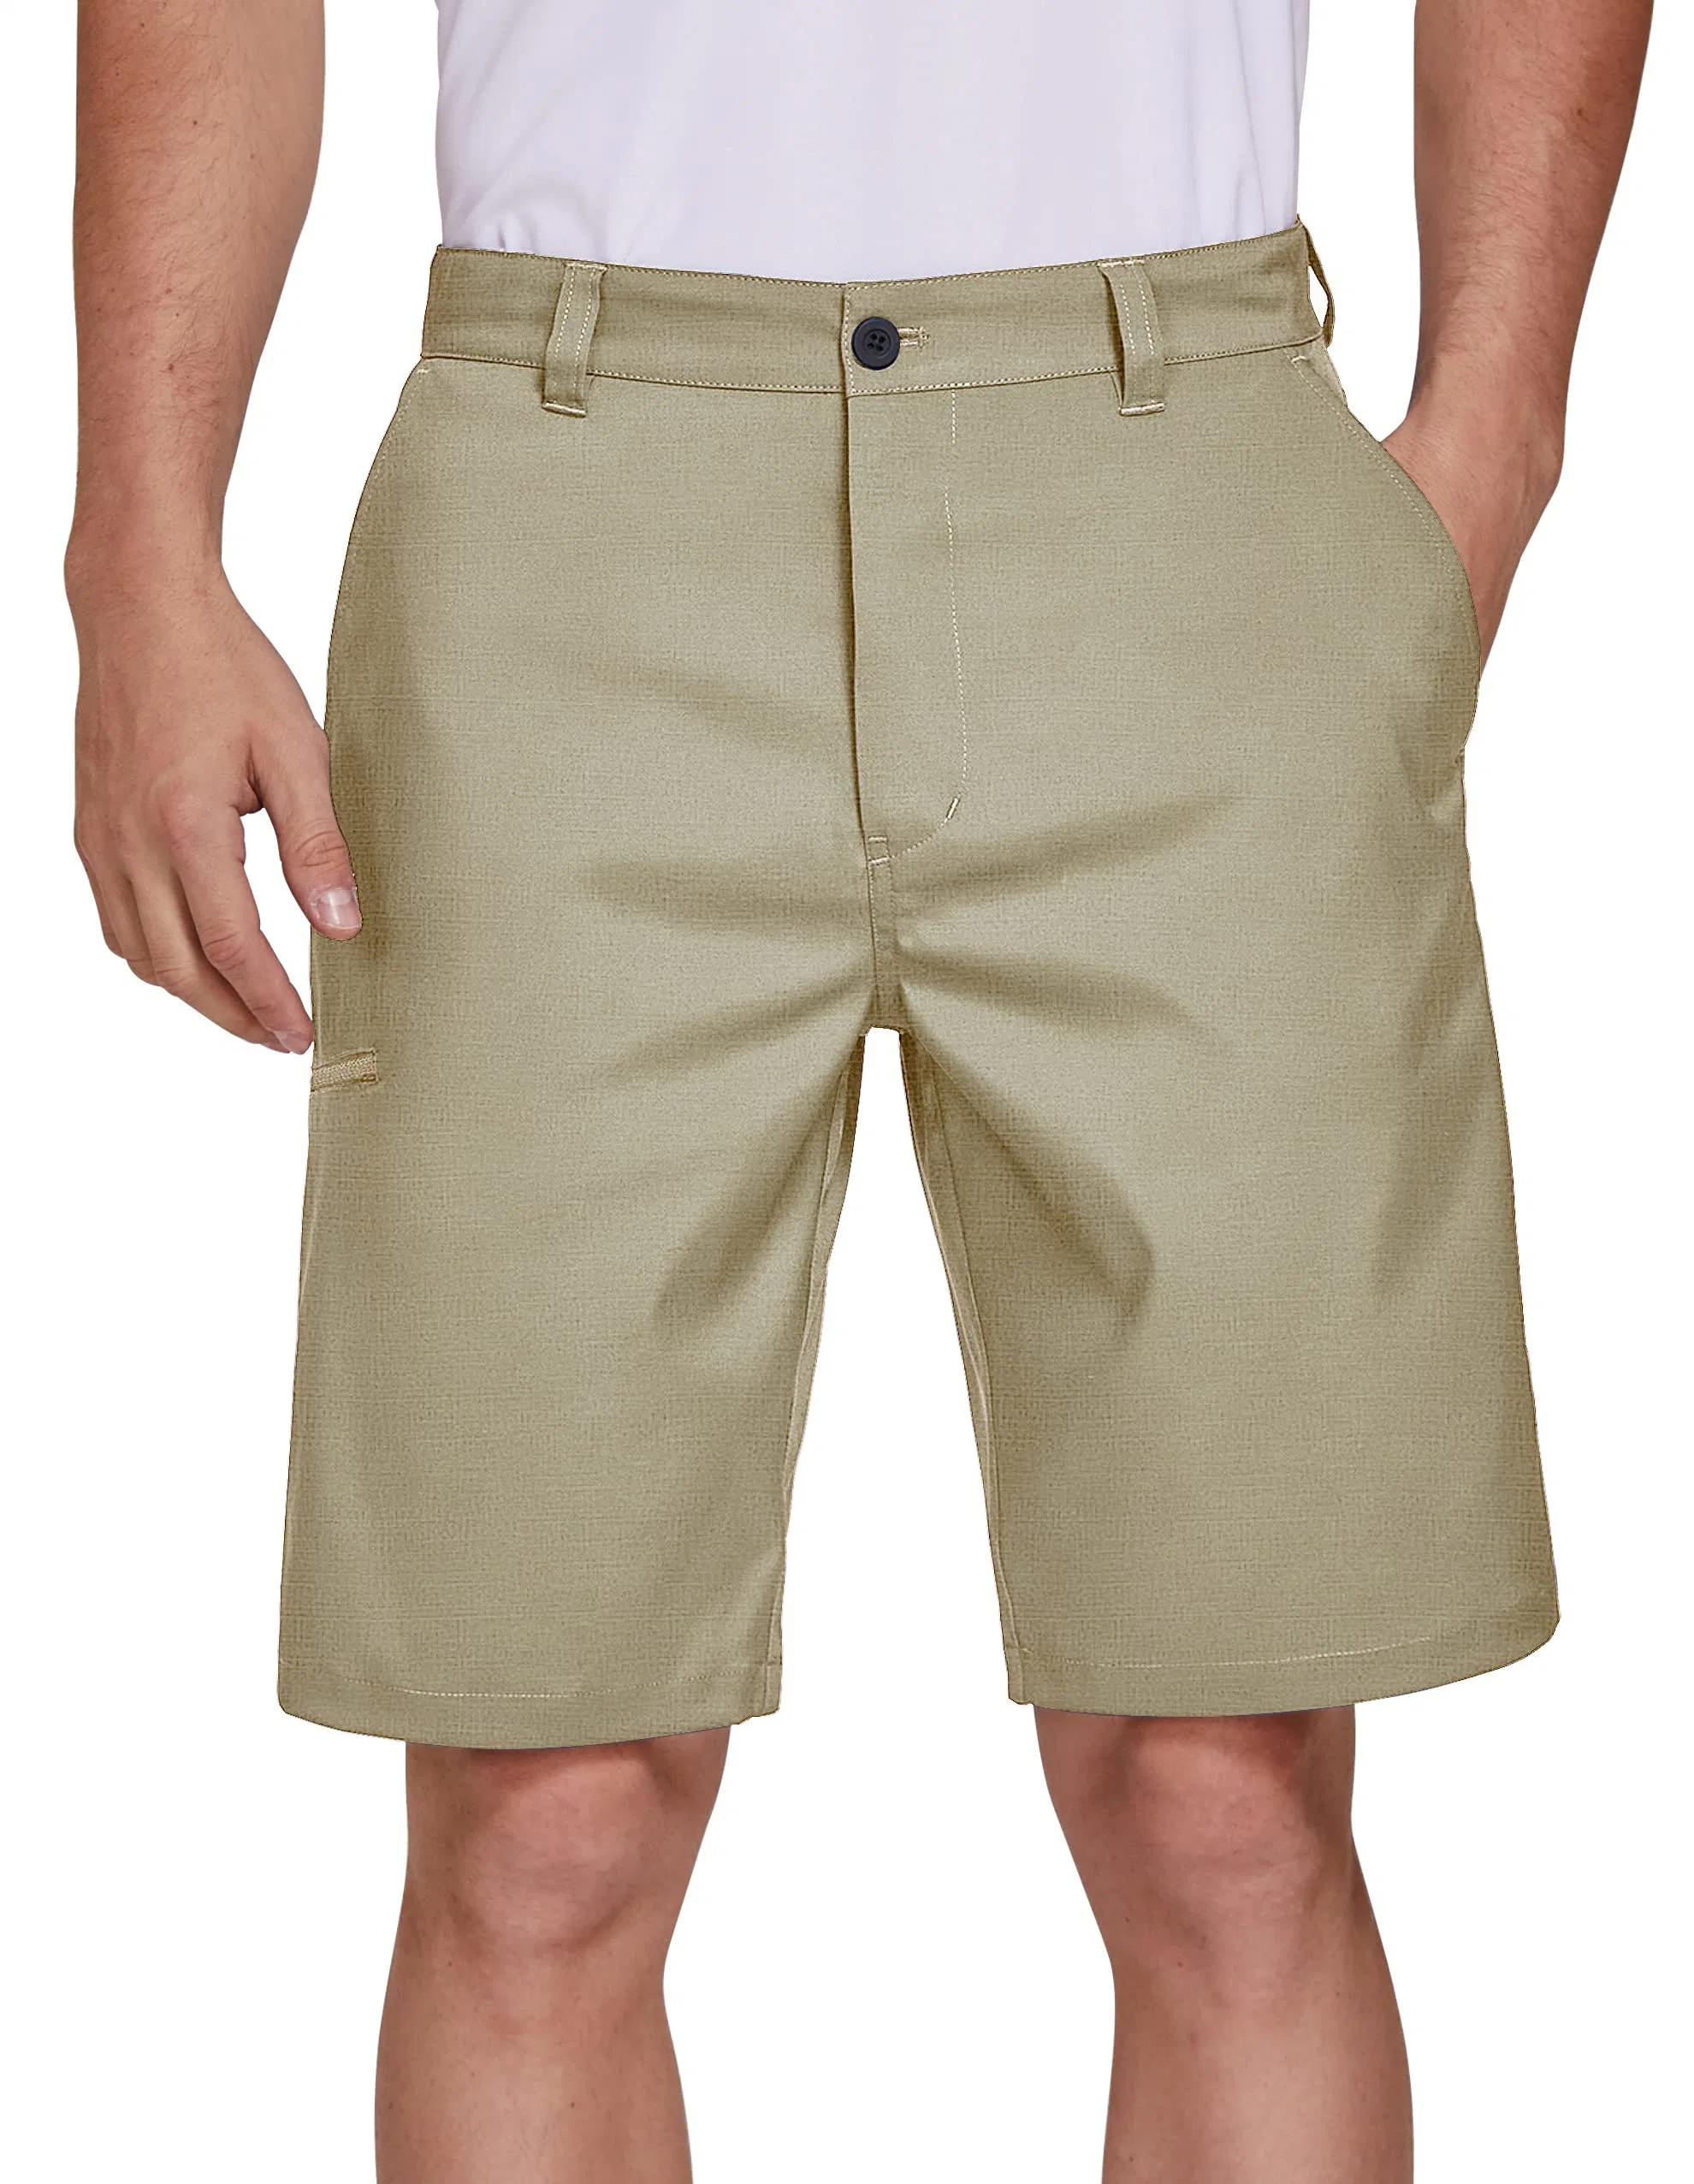 Khaki Shorts Custom Golf Hybrid Dress Shorts Casual Chino Stretch Flat Front Lightweight Quick Dry Shorts with Pockets